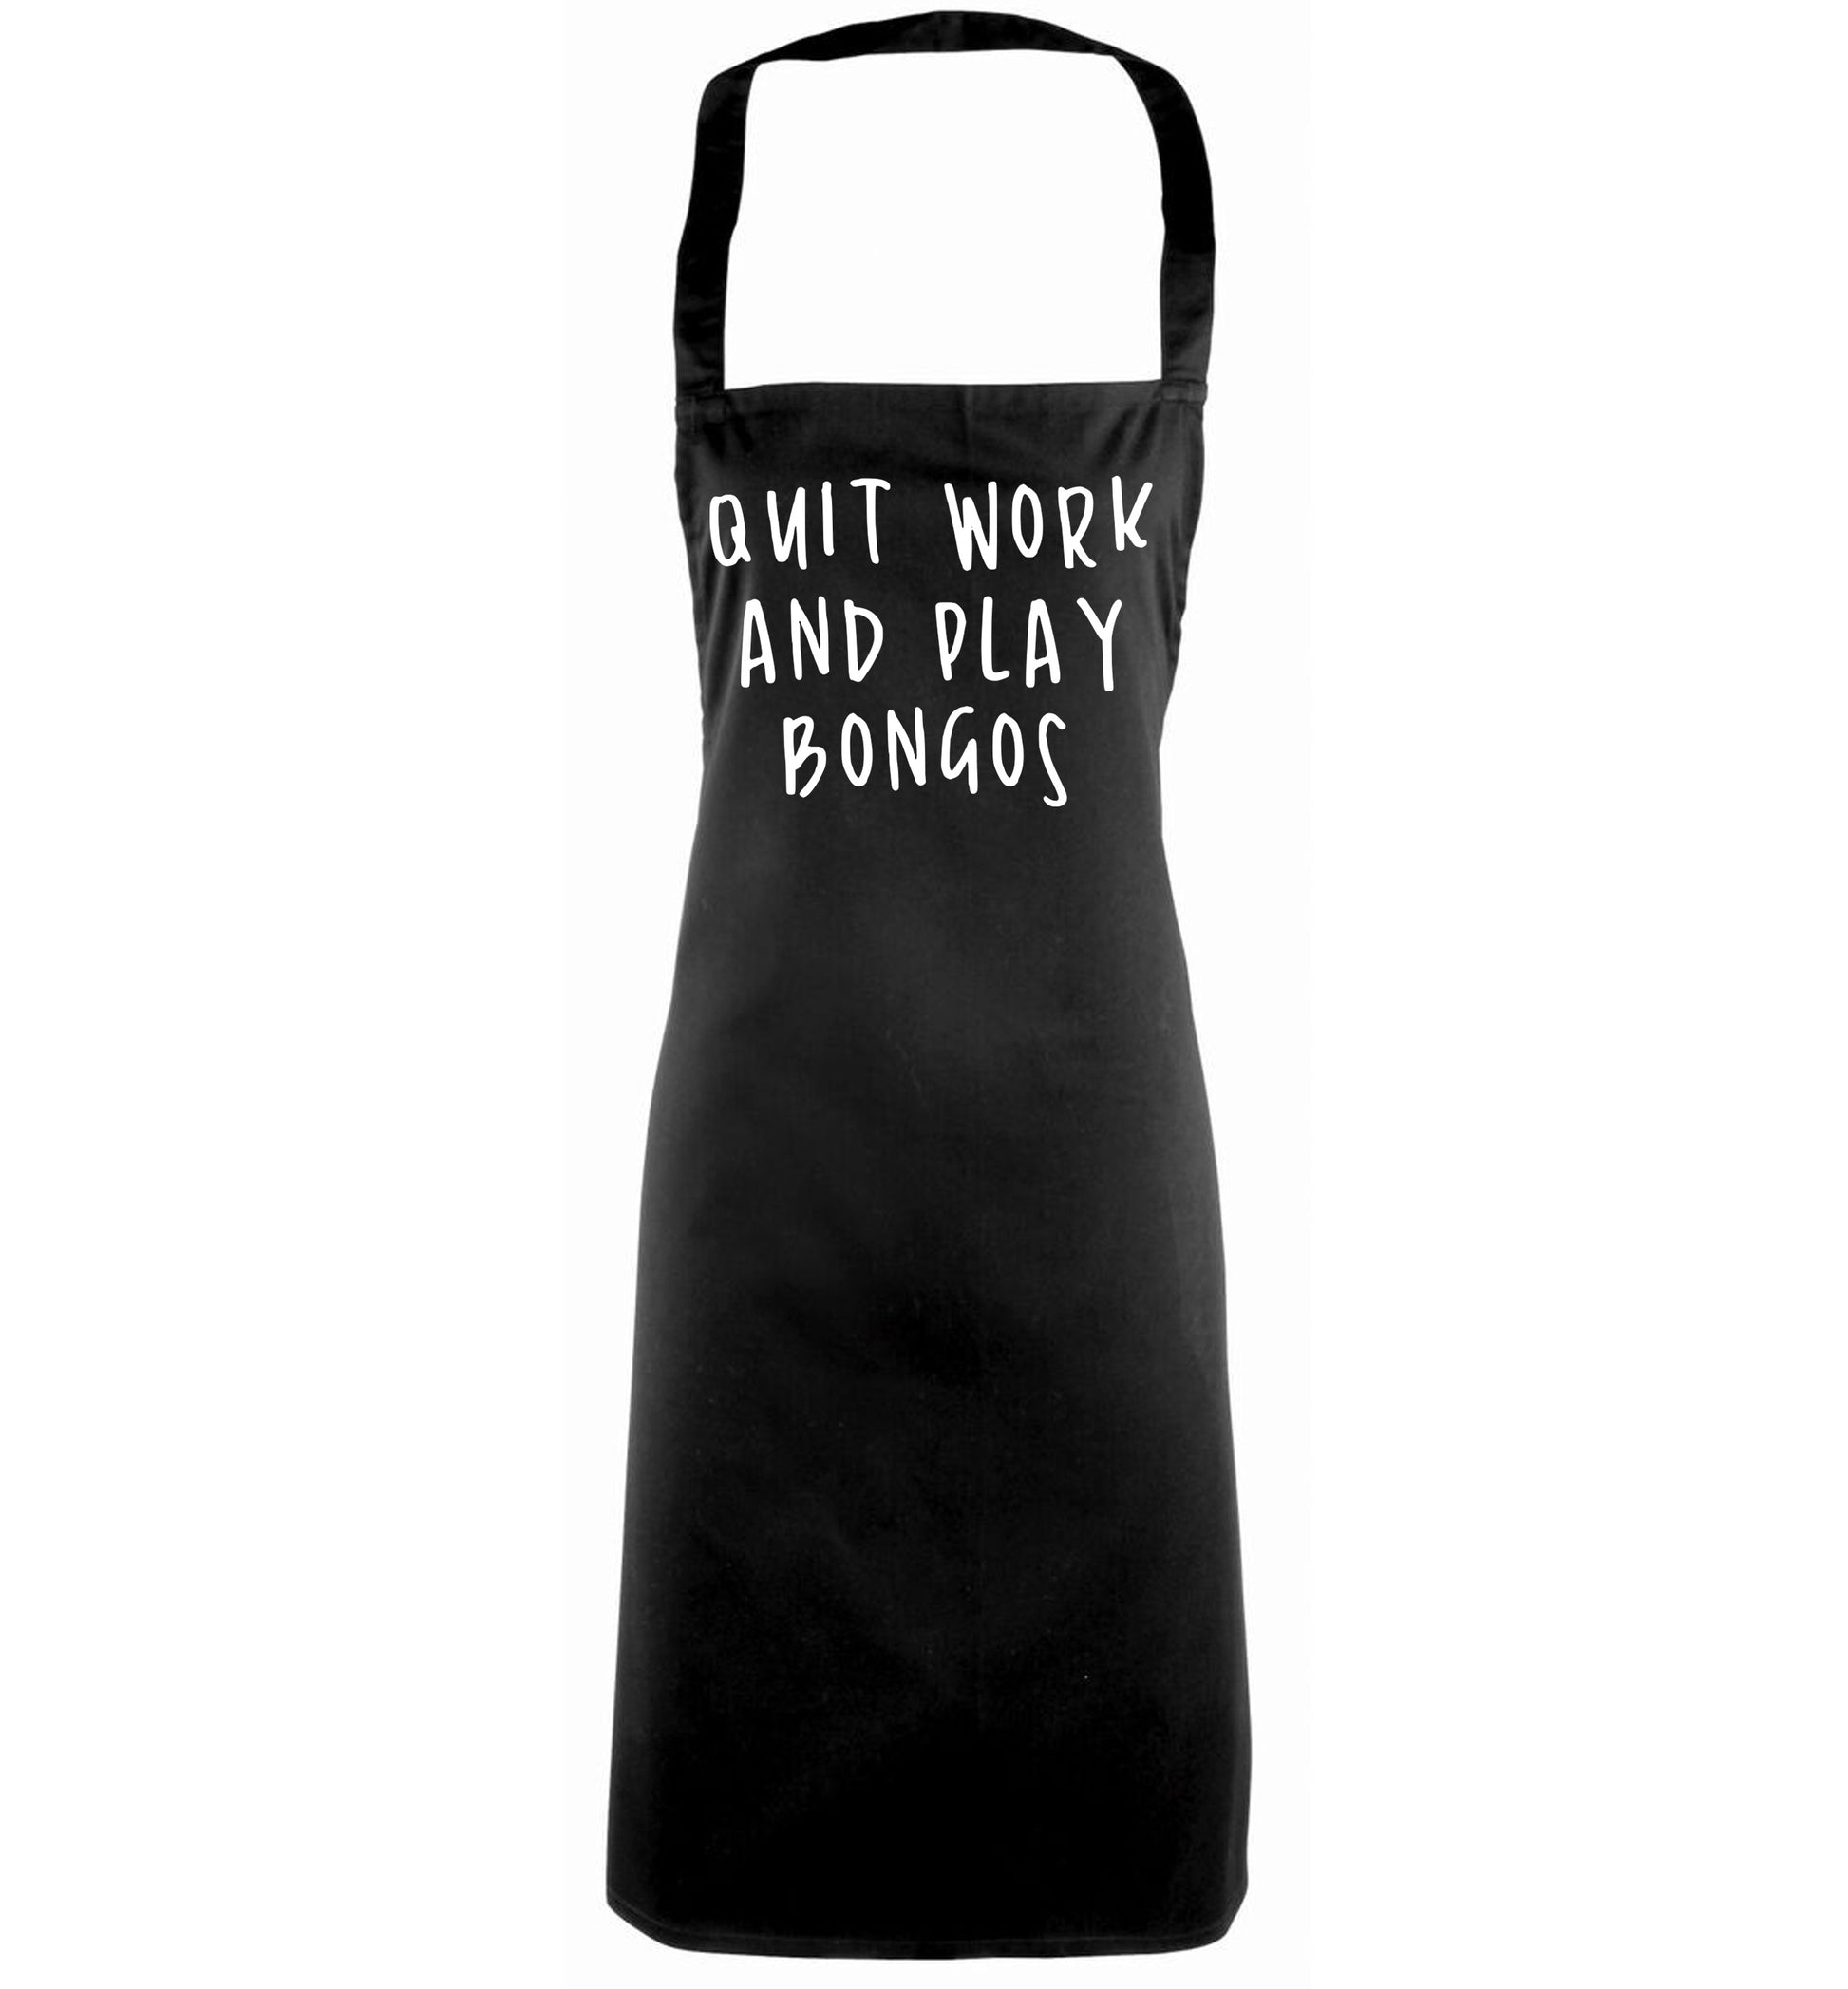 Quit work and play bongos black apron